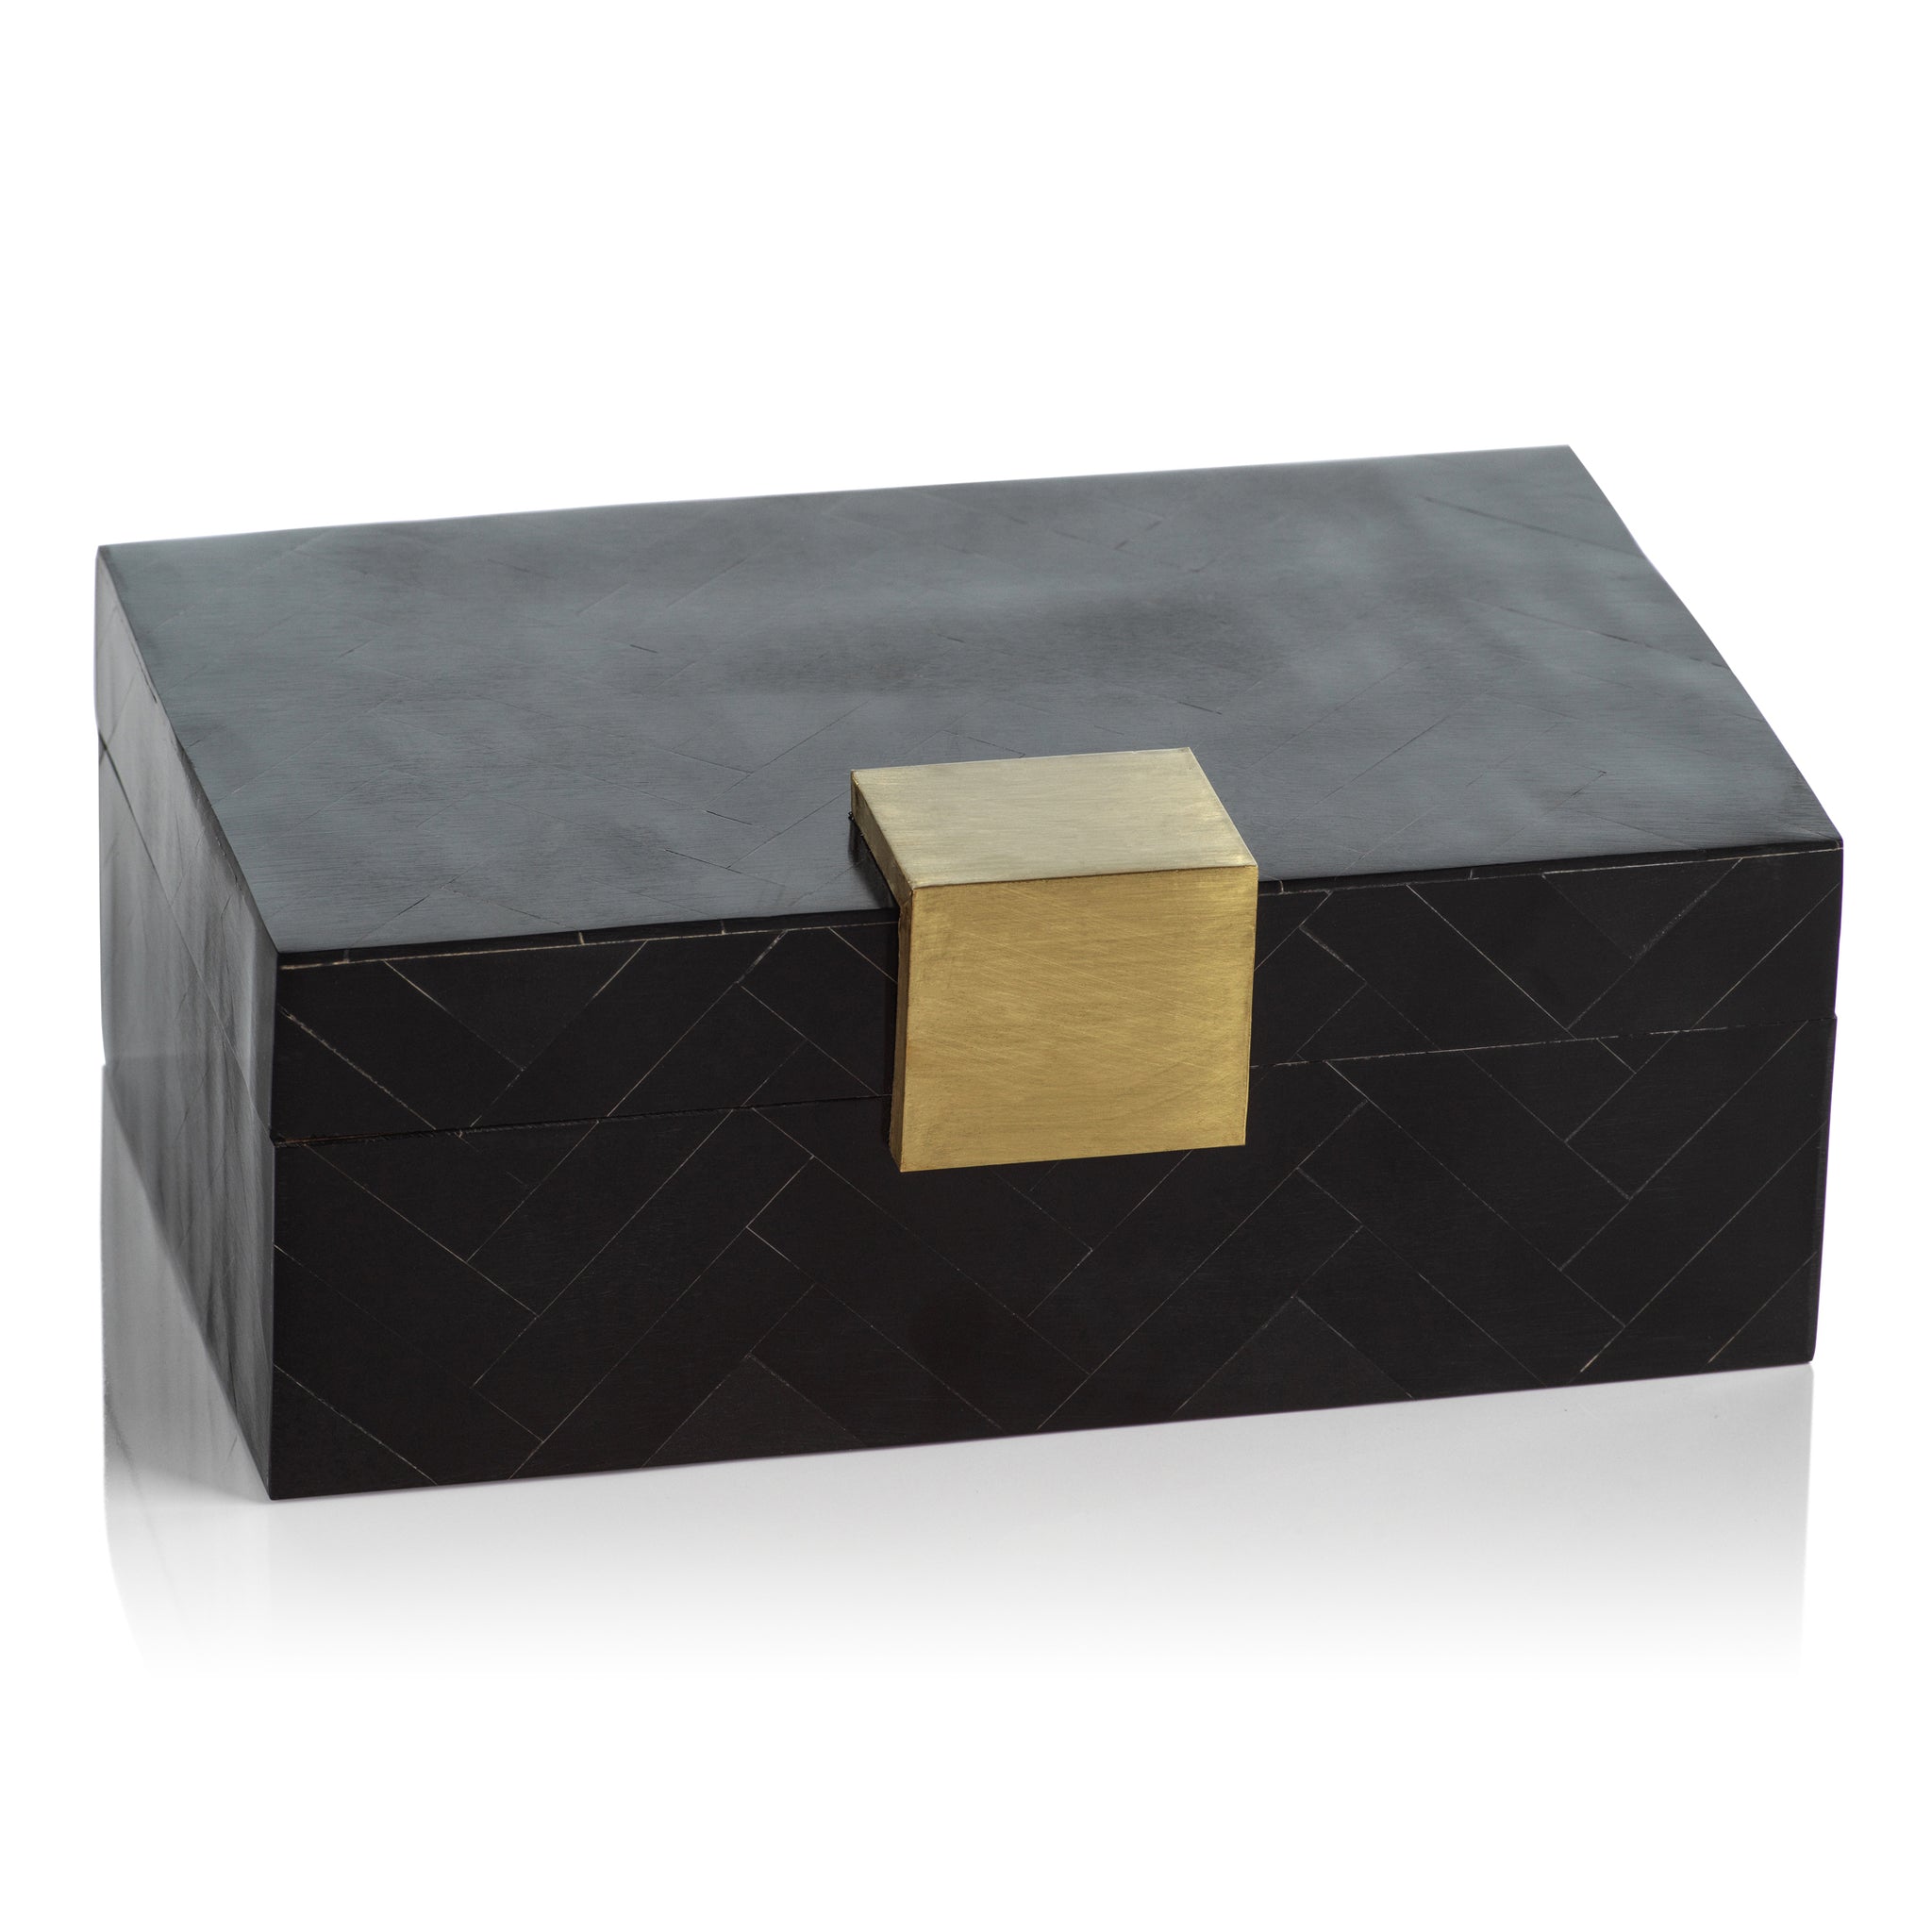 Cape Verde Black Resin Chevron Inlaid Box with Brass Trim